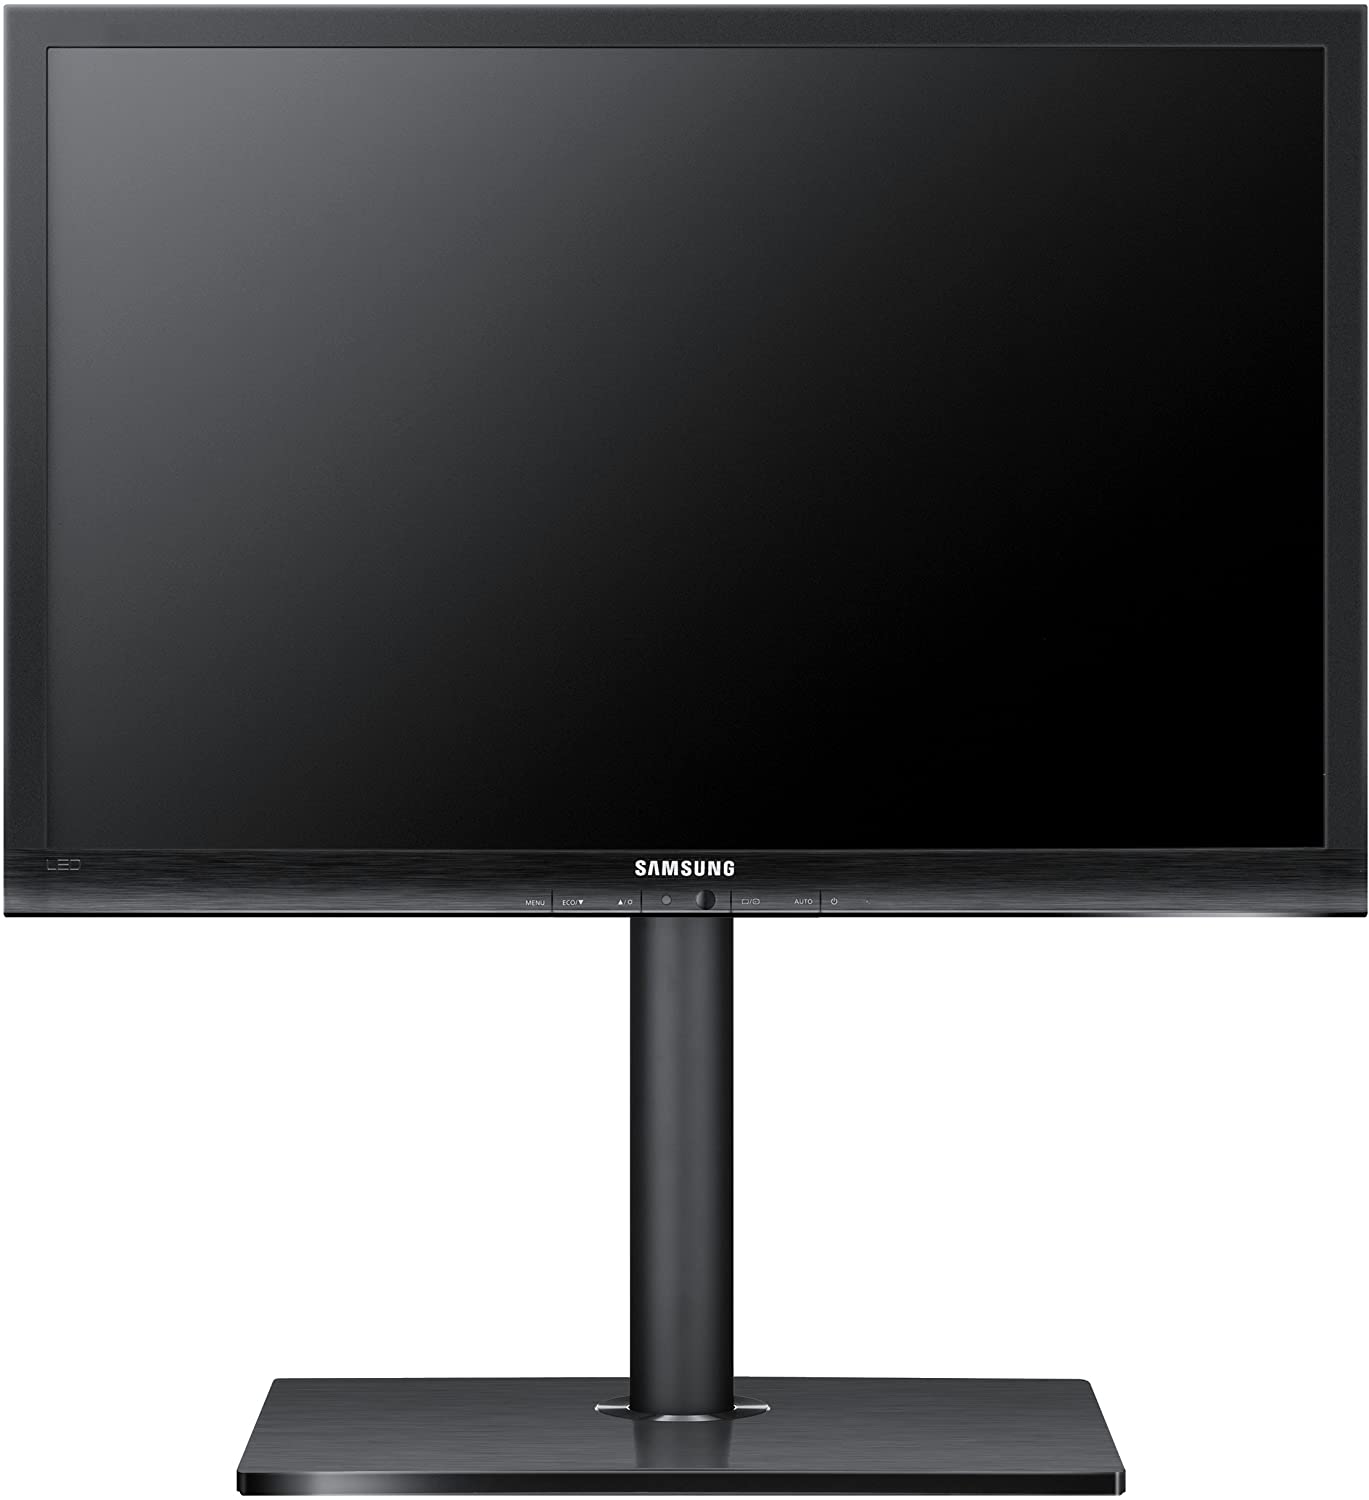 Samsung S27A650D LED LCD monitor 27″ inches 1920×1080 (Full HD) Contrast 3000:1 Brightness 300 cd/m2 Response time 3ms DisplayPort VGA DVI